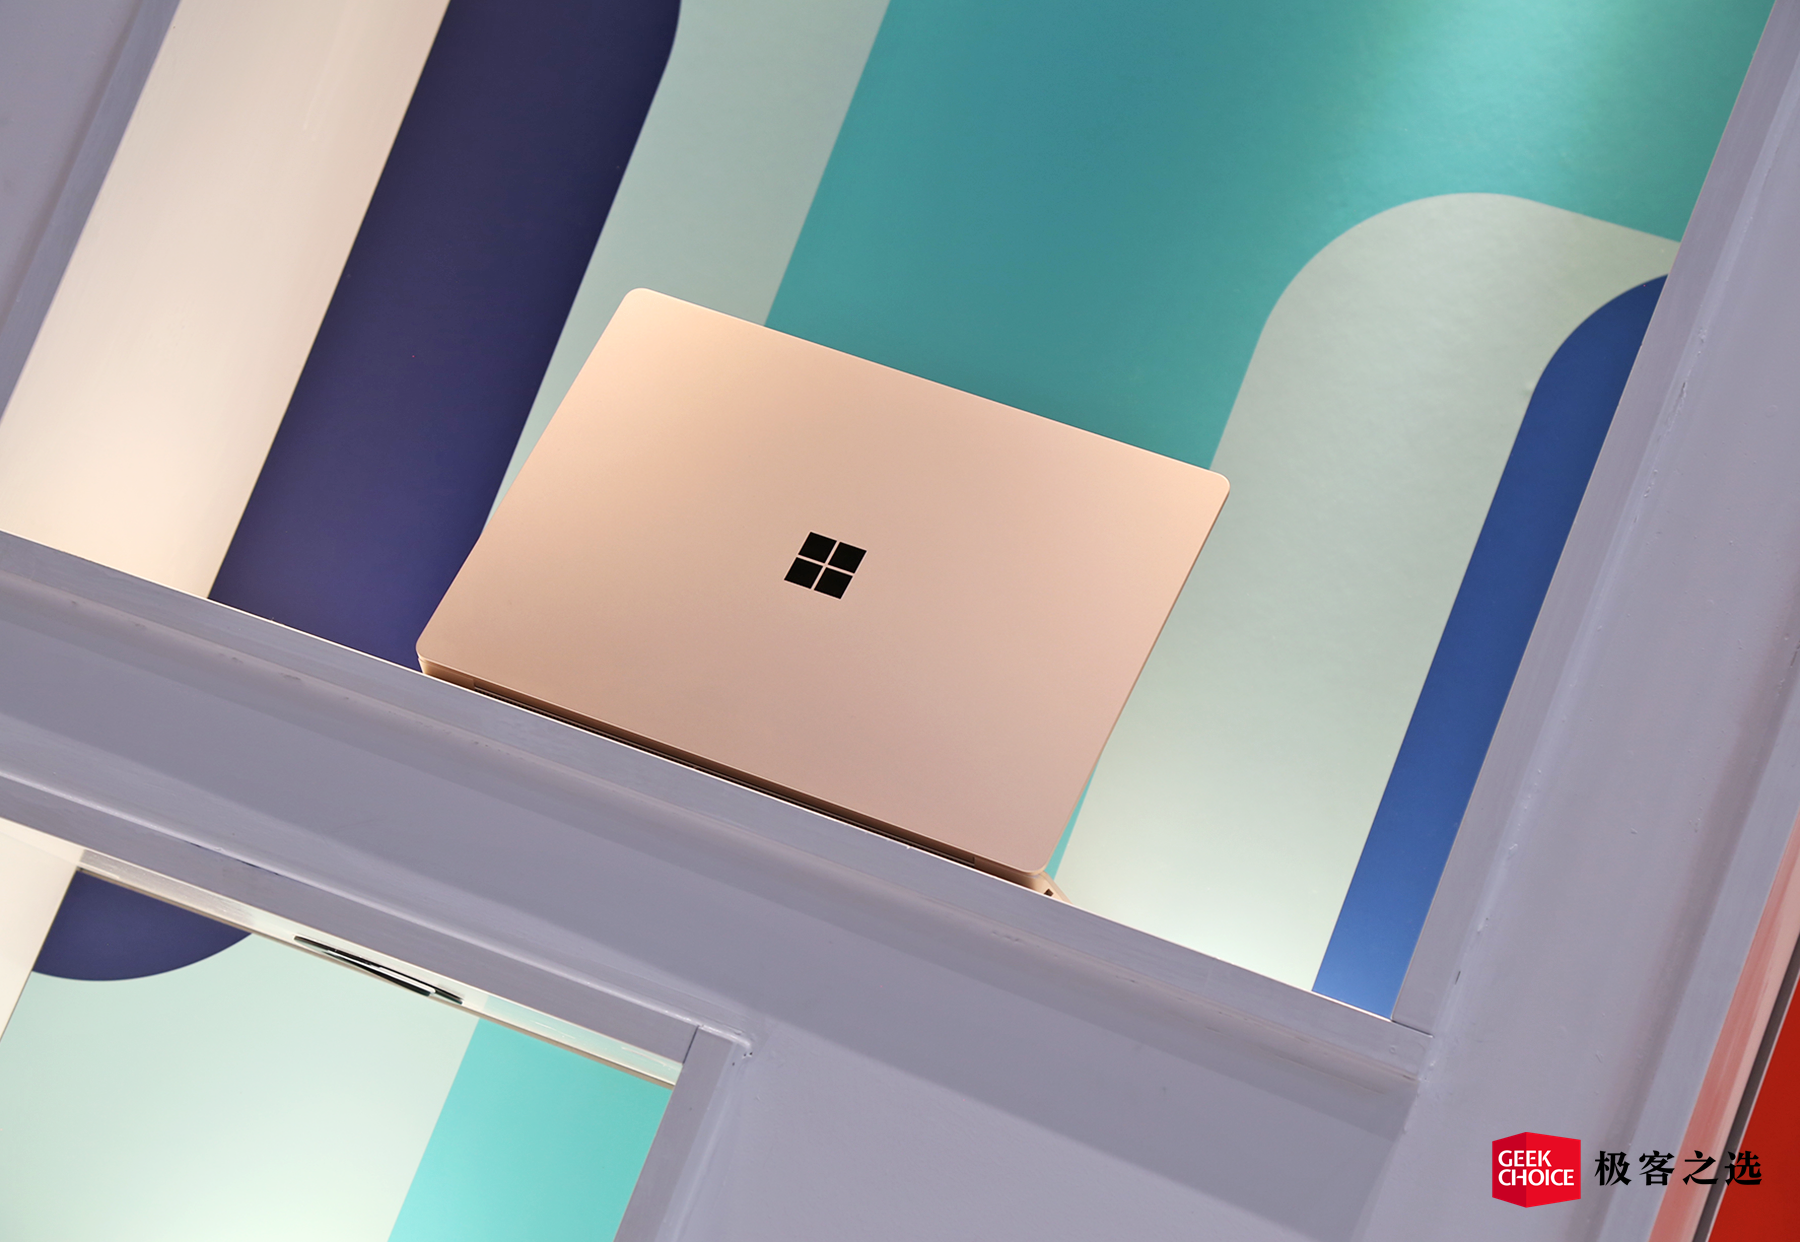 Surface Laptop 4 体验：依旧7888 元起售，微软也玩起了「加量不加价 